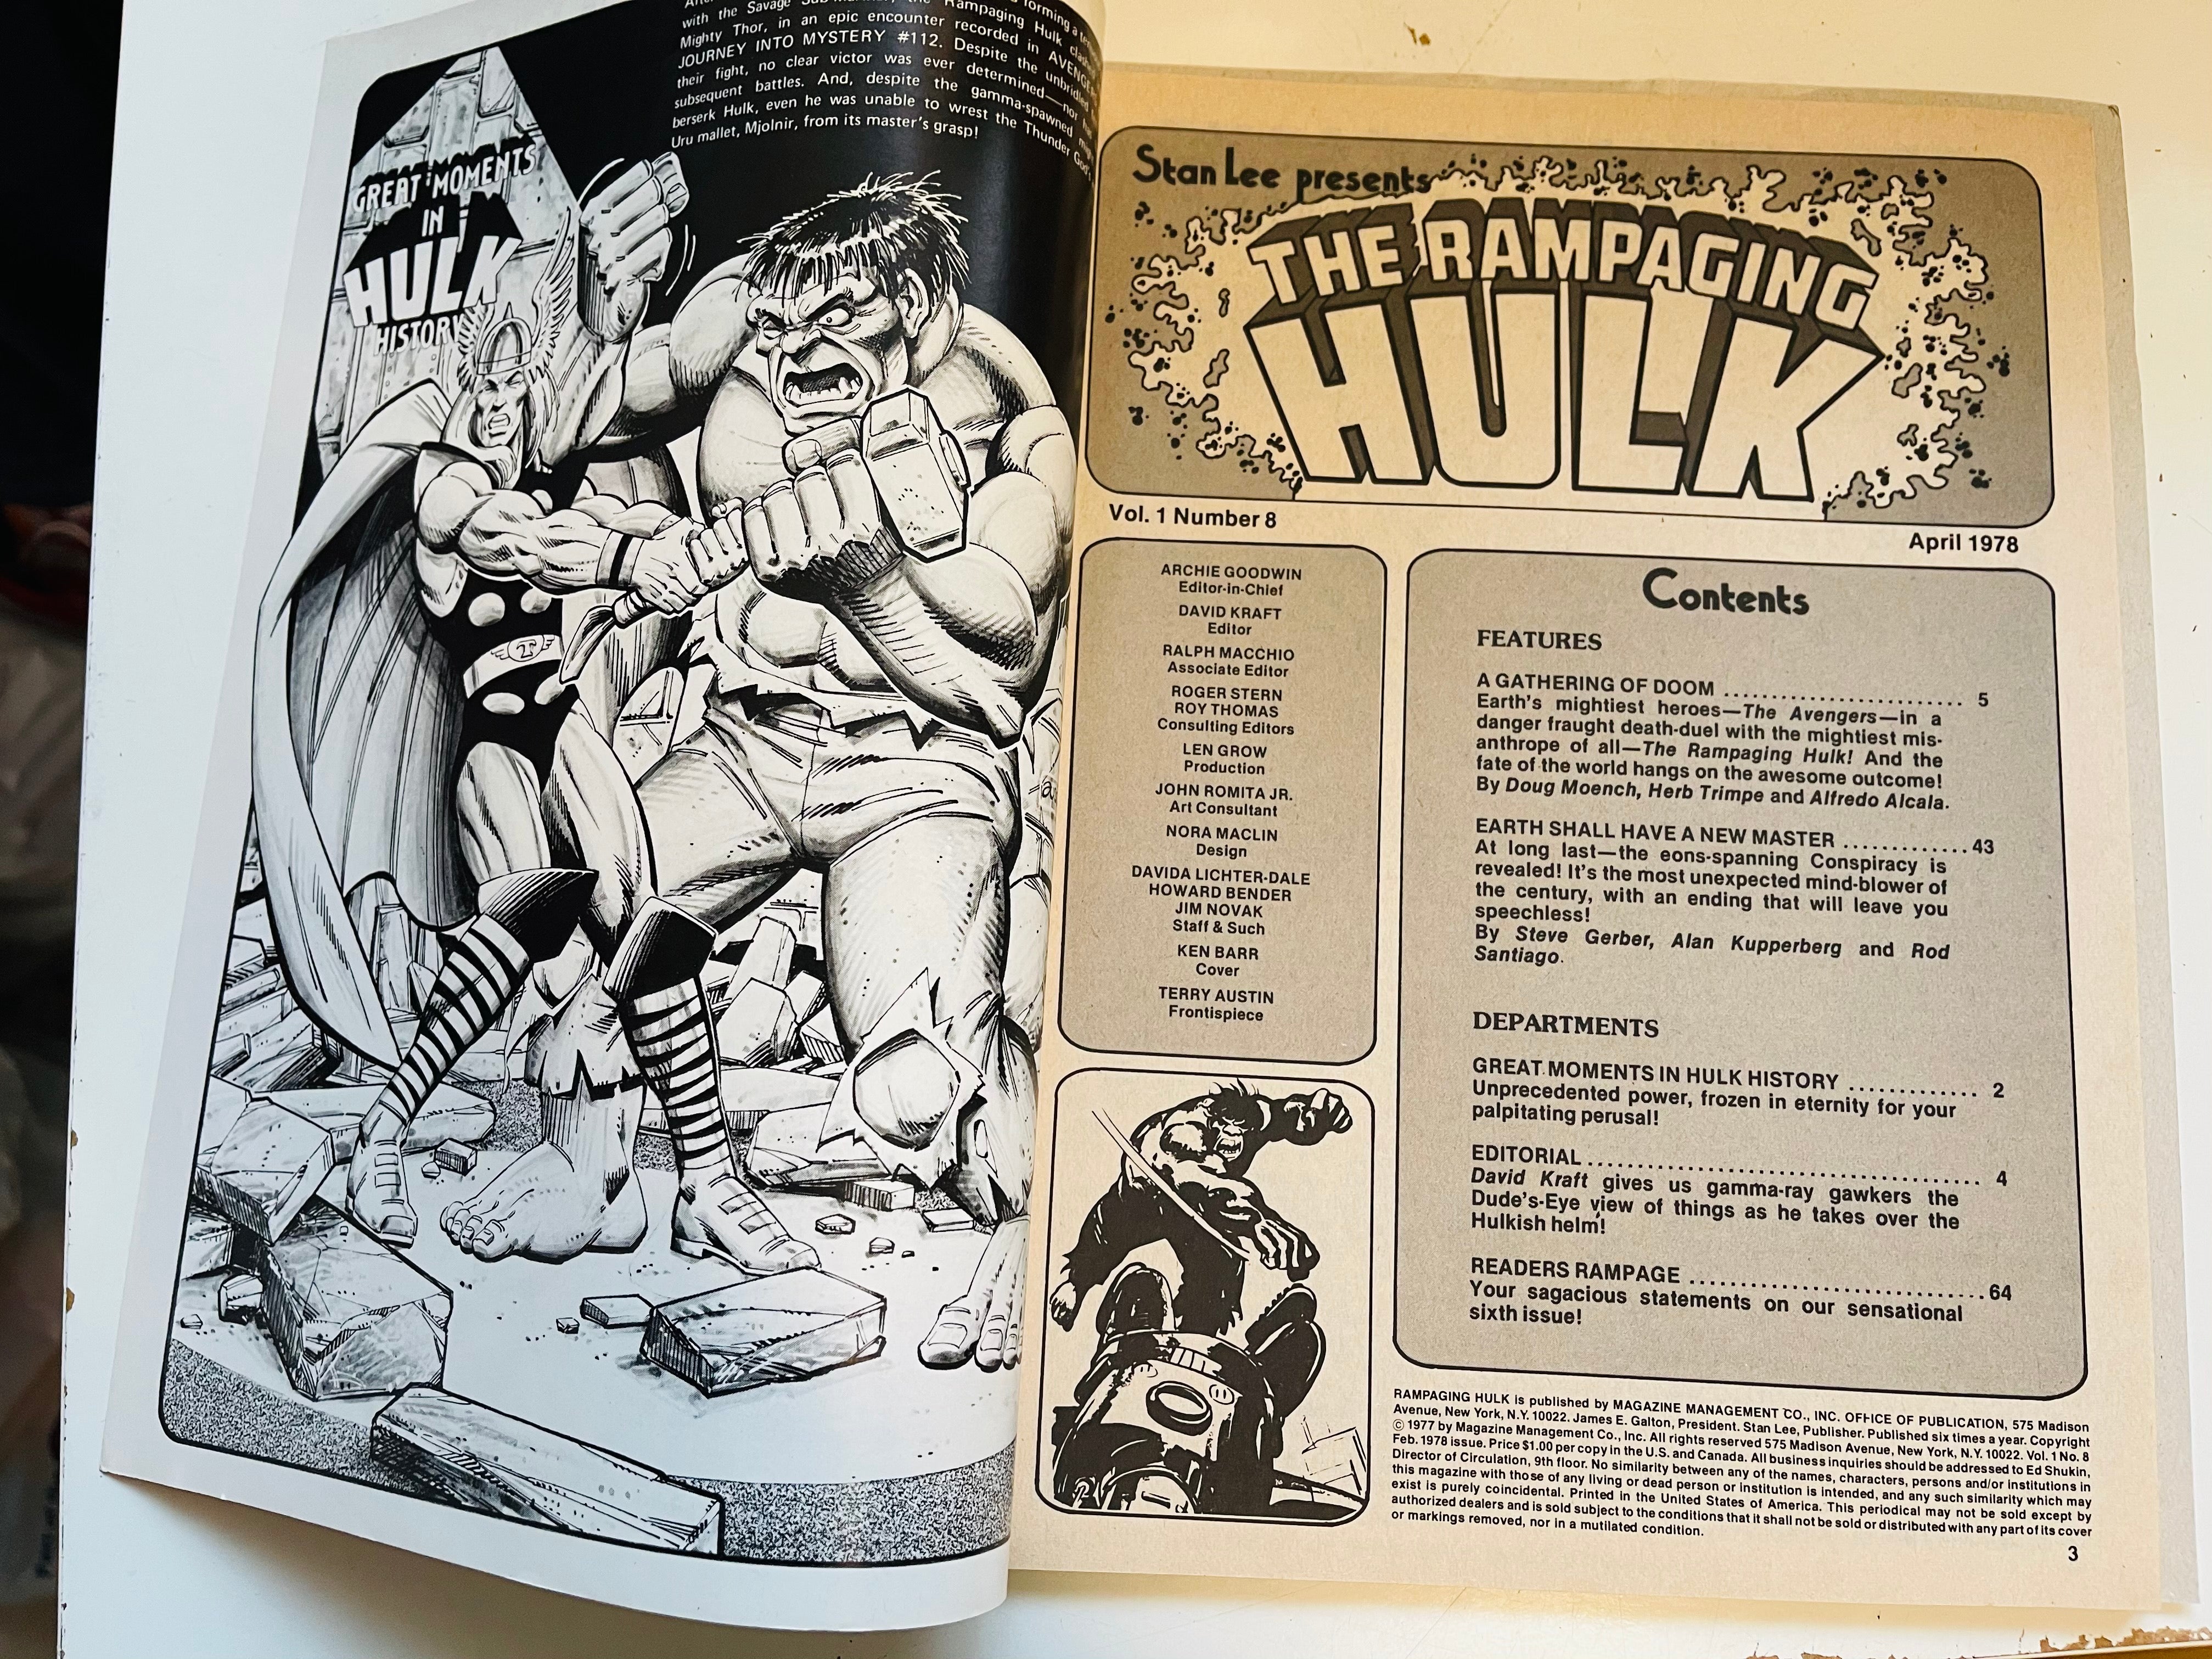 The Rampaging Hulk #8 comic magazine 1977